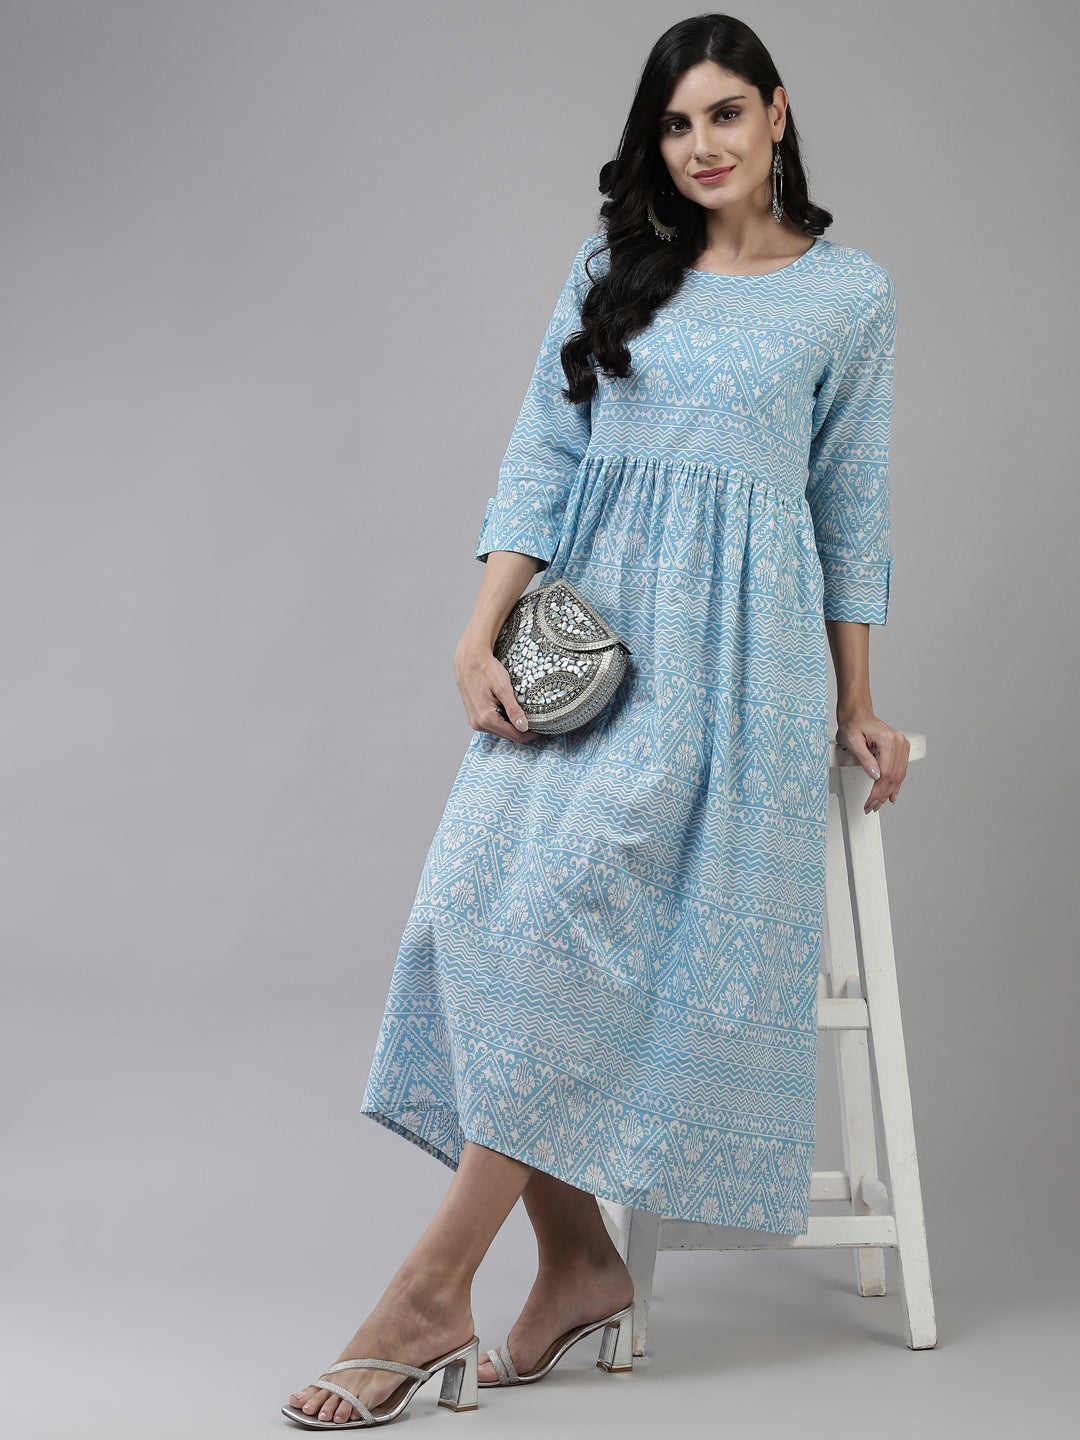 Blue-Cotton-Ethnic-Midi-Dress